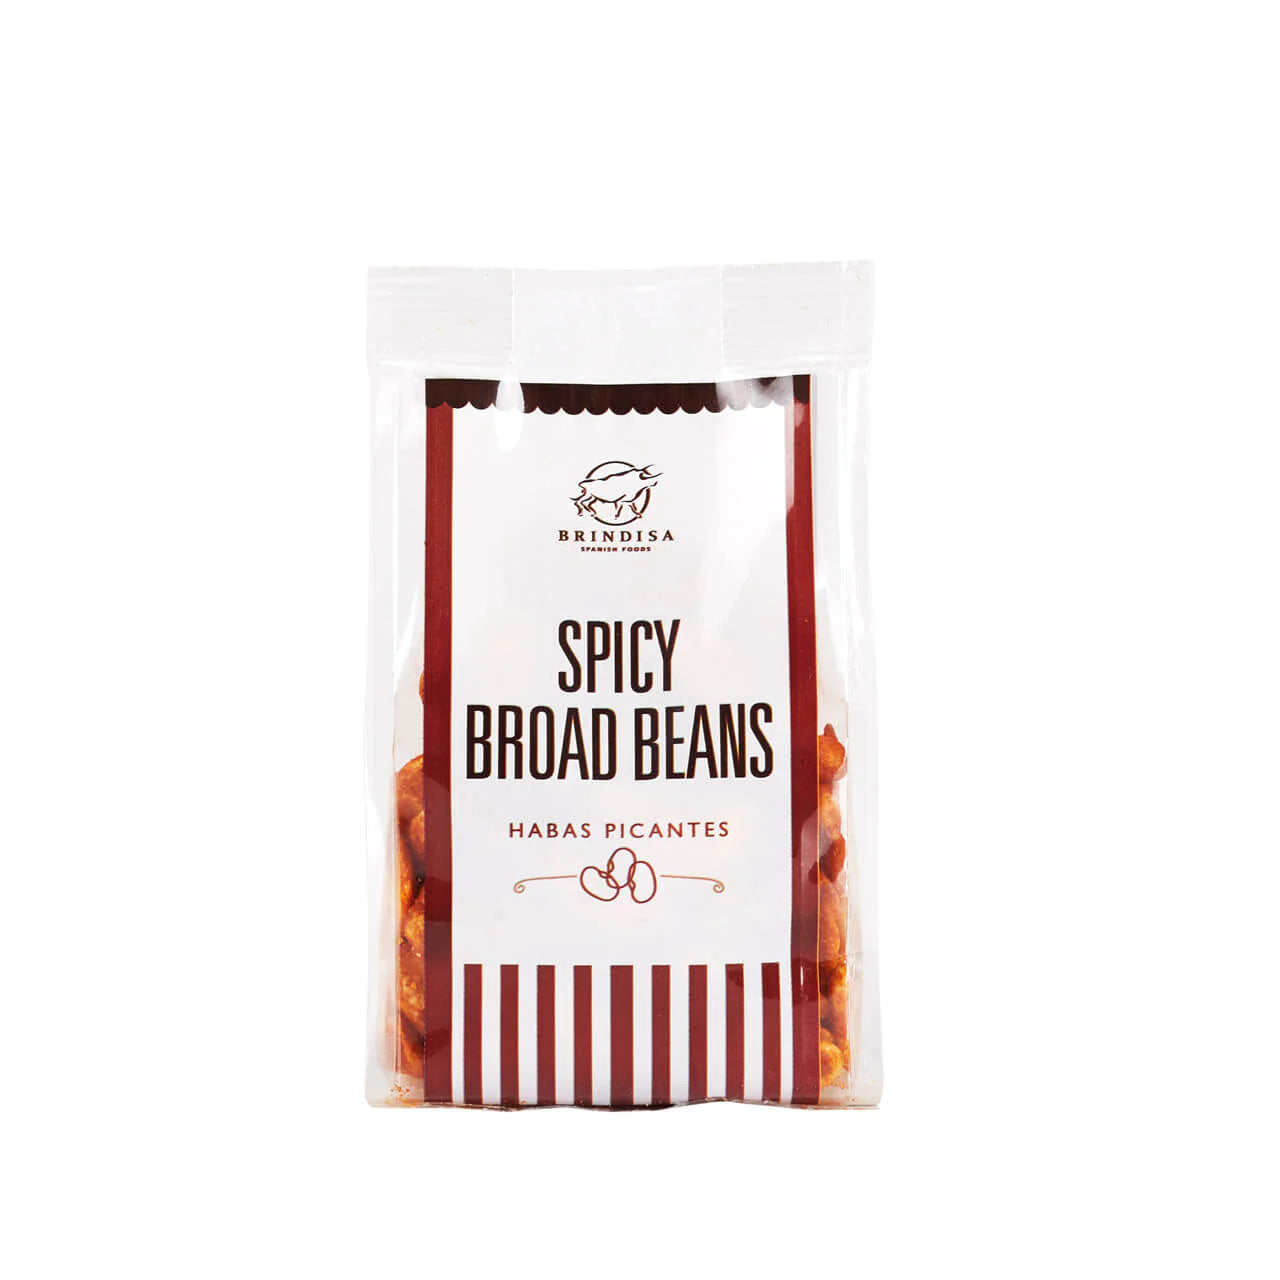 Brindisa Spicy Broad Beans - Habas Picantes 100g